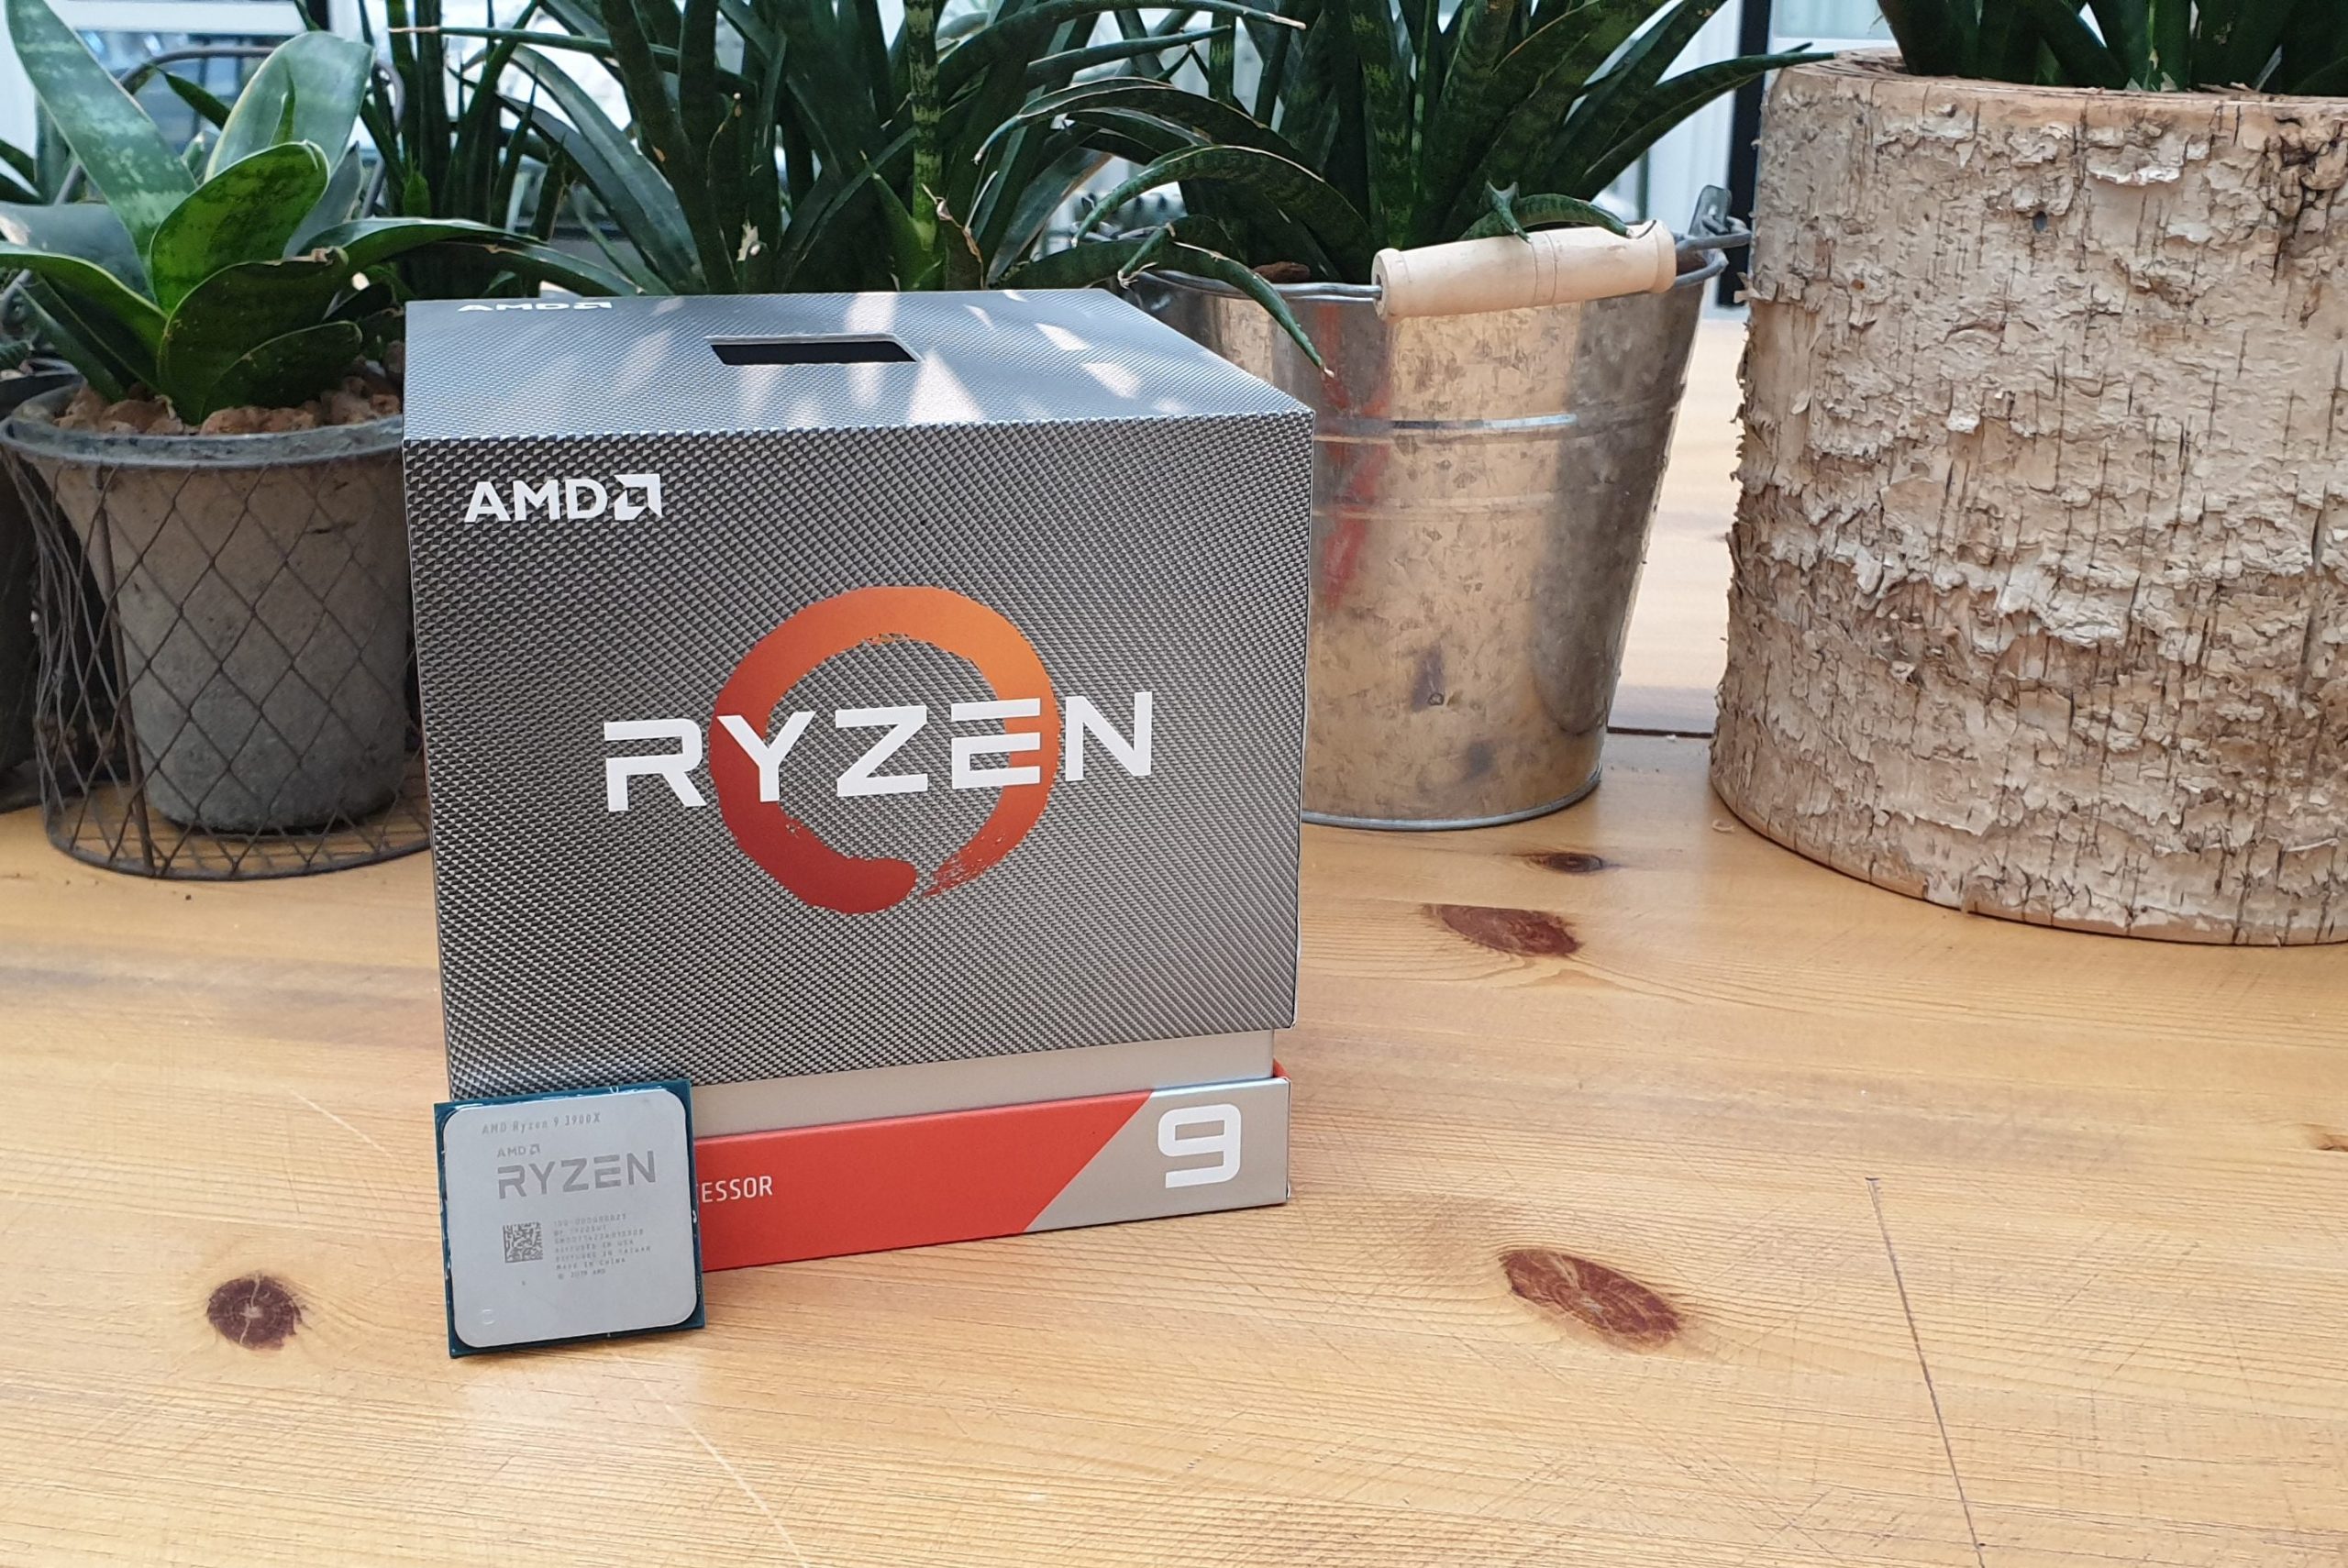 2. AMD Ryzen 9 3900X Processor